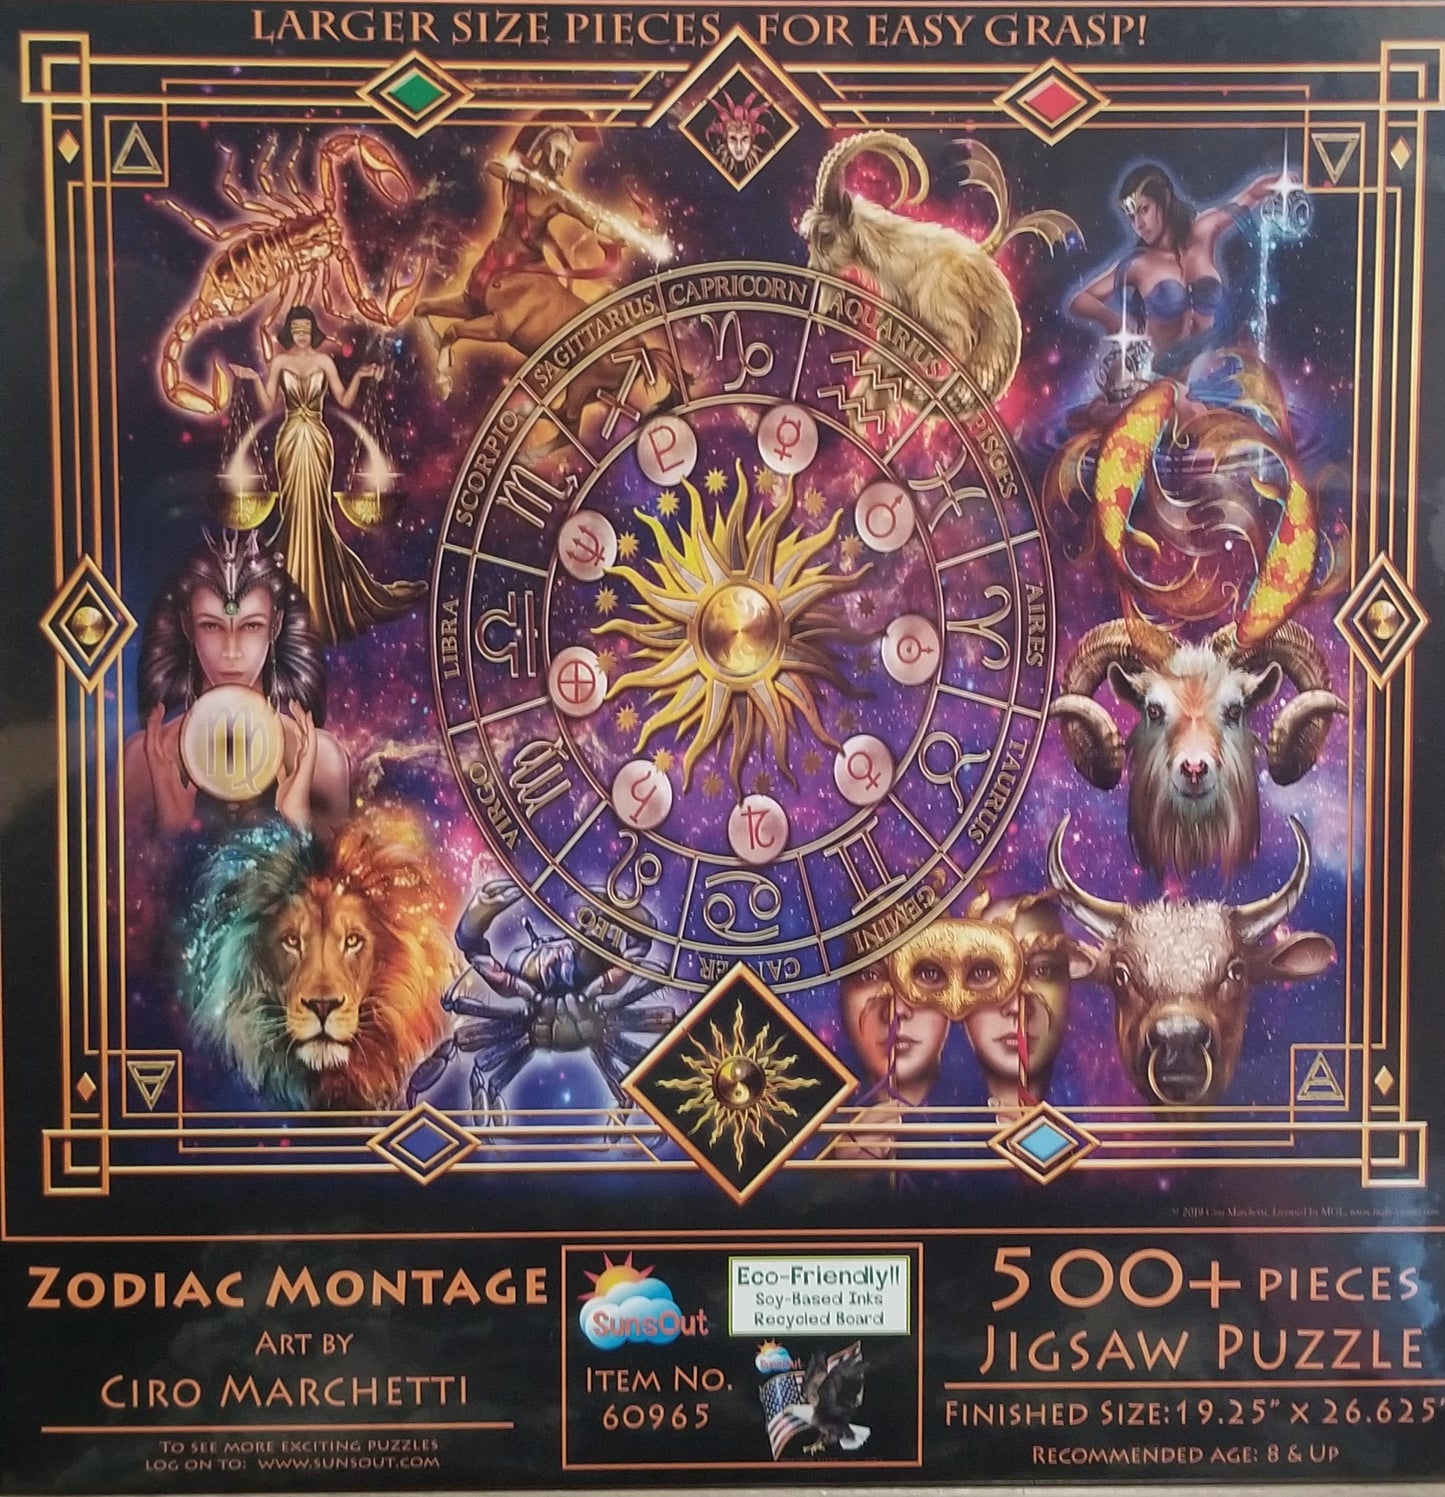 Zodiac Montage af Ciro Marchetti, 500 brikker puslespil